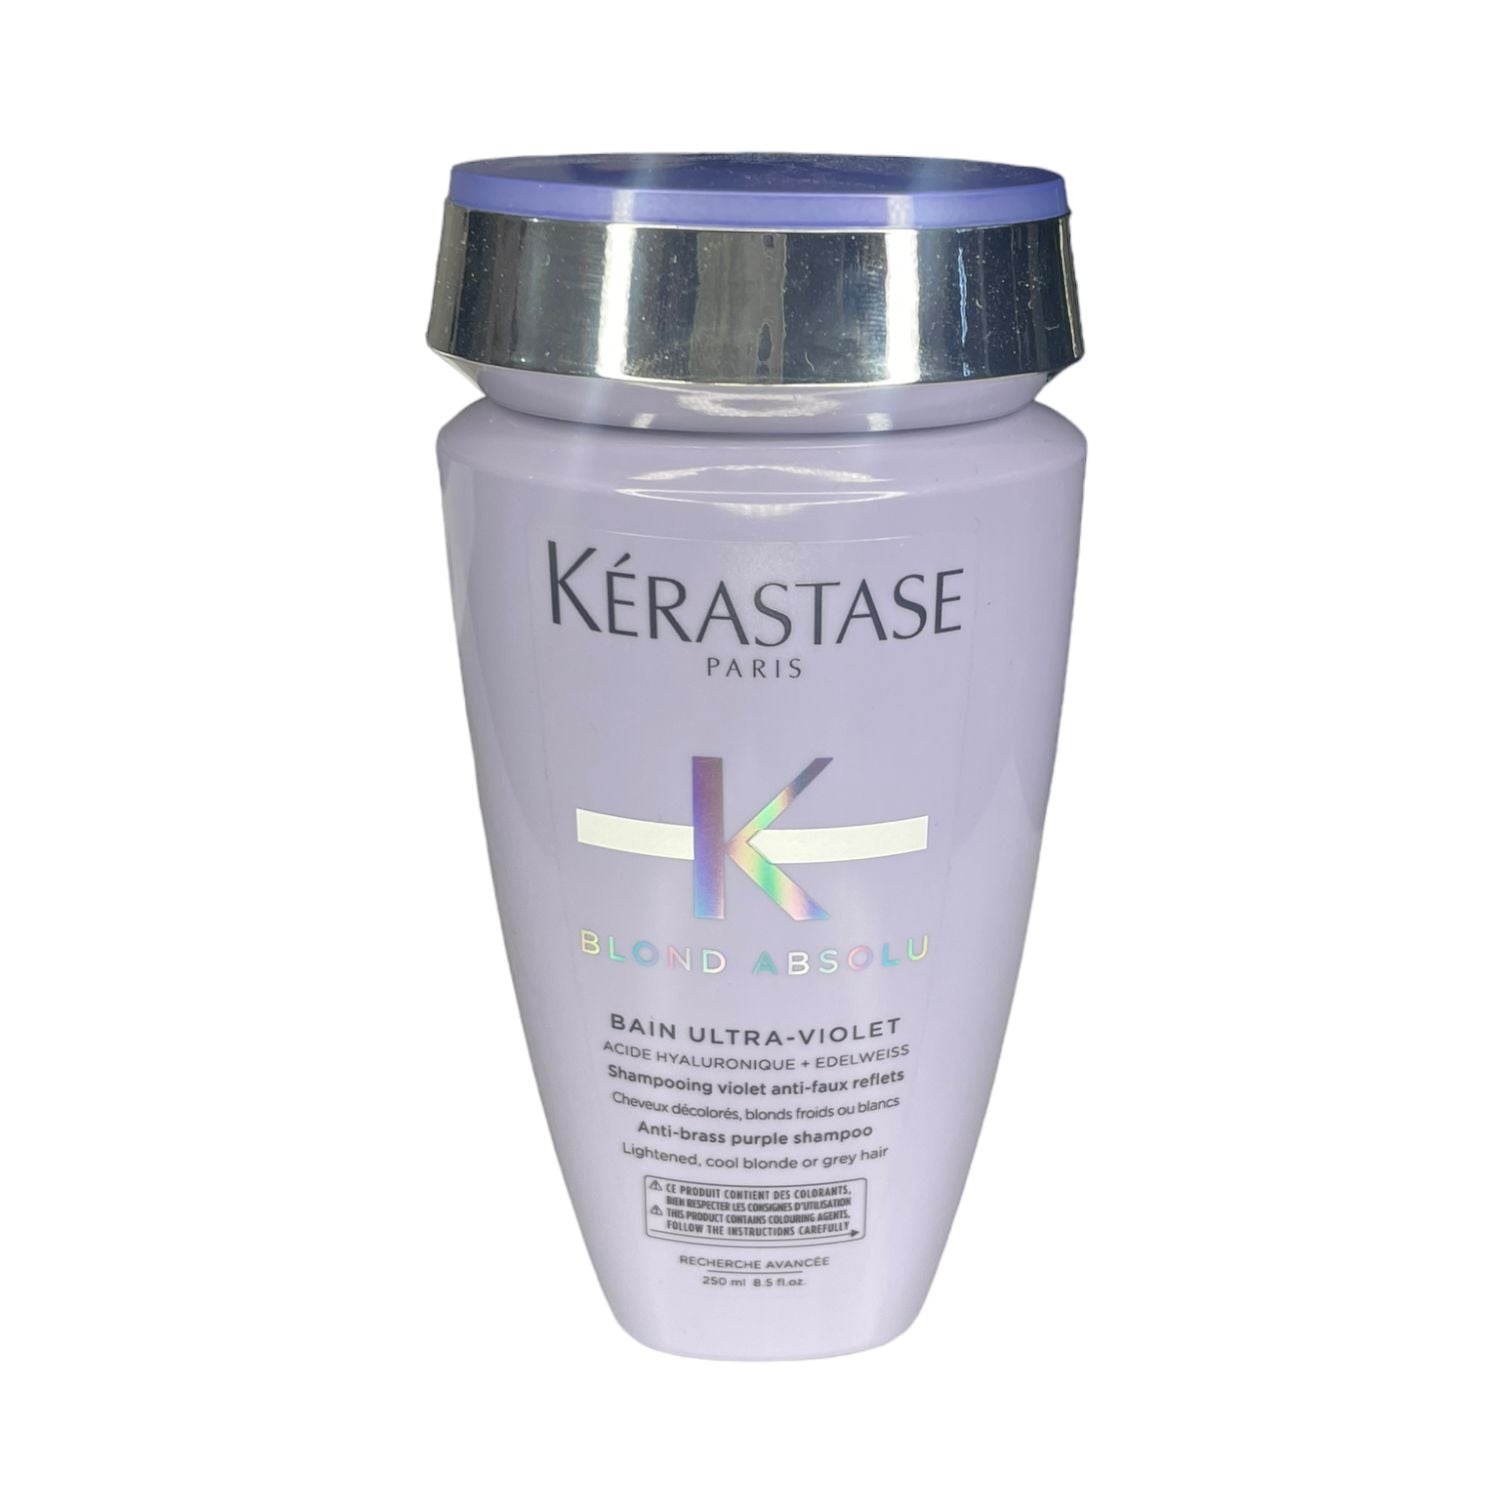 Kérastase - Bain Ultra Violet - 250 ml